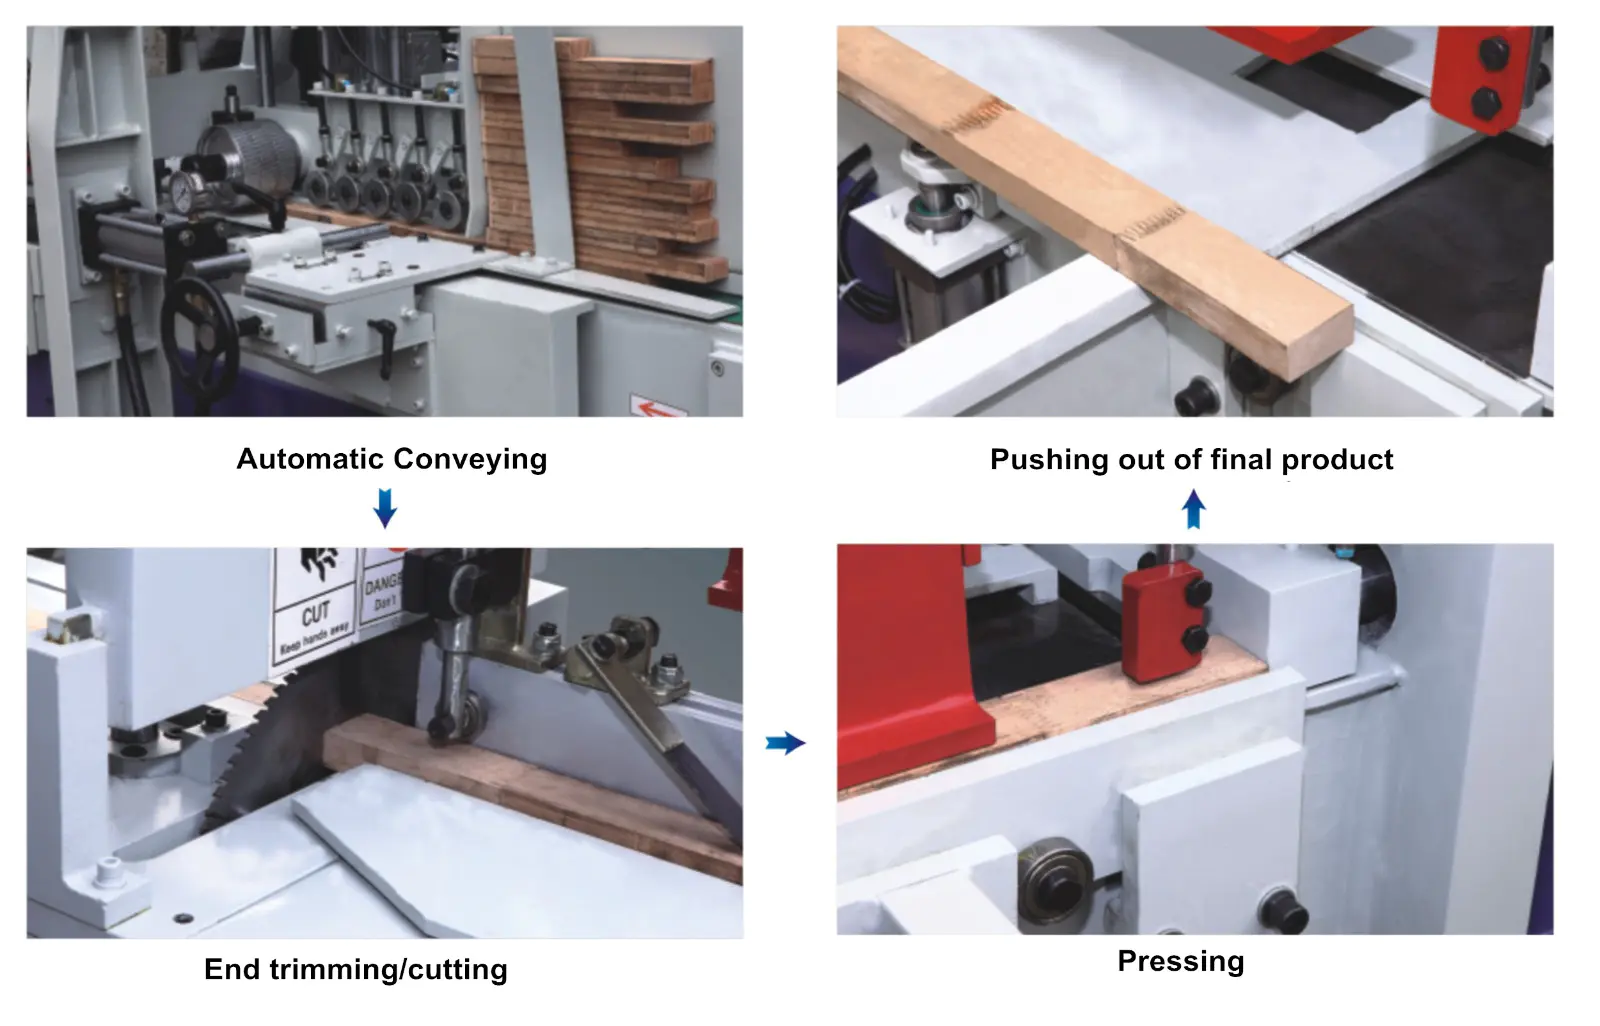 Gewinn joint making machine high-performance for carpentry